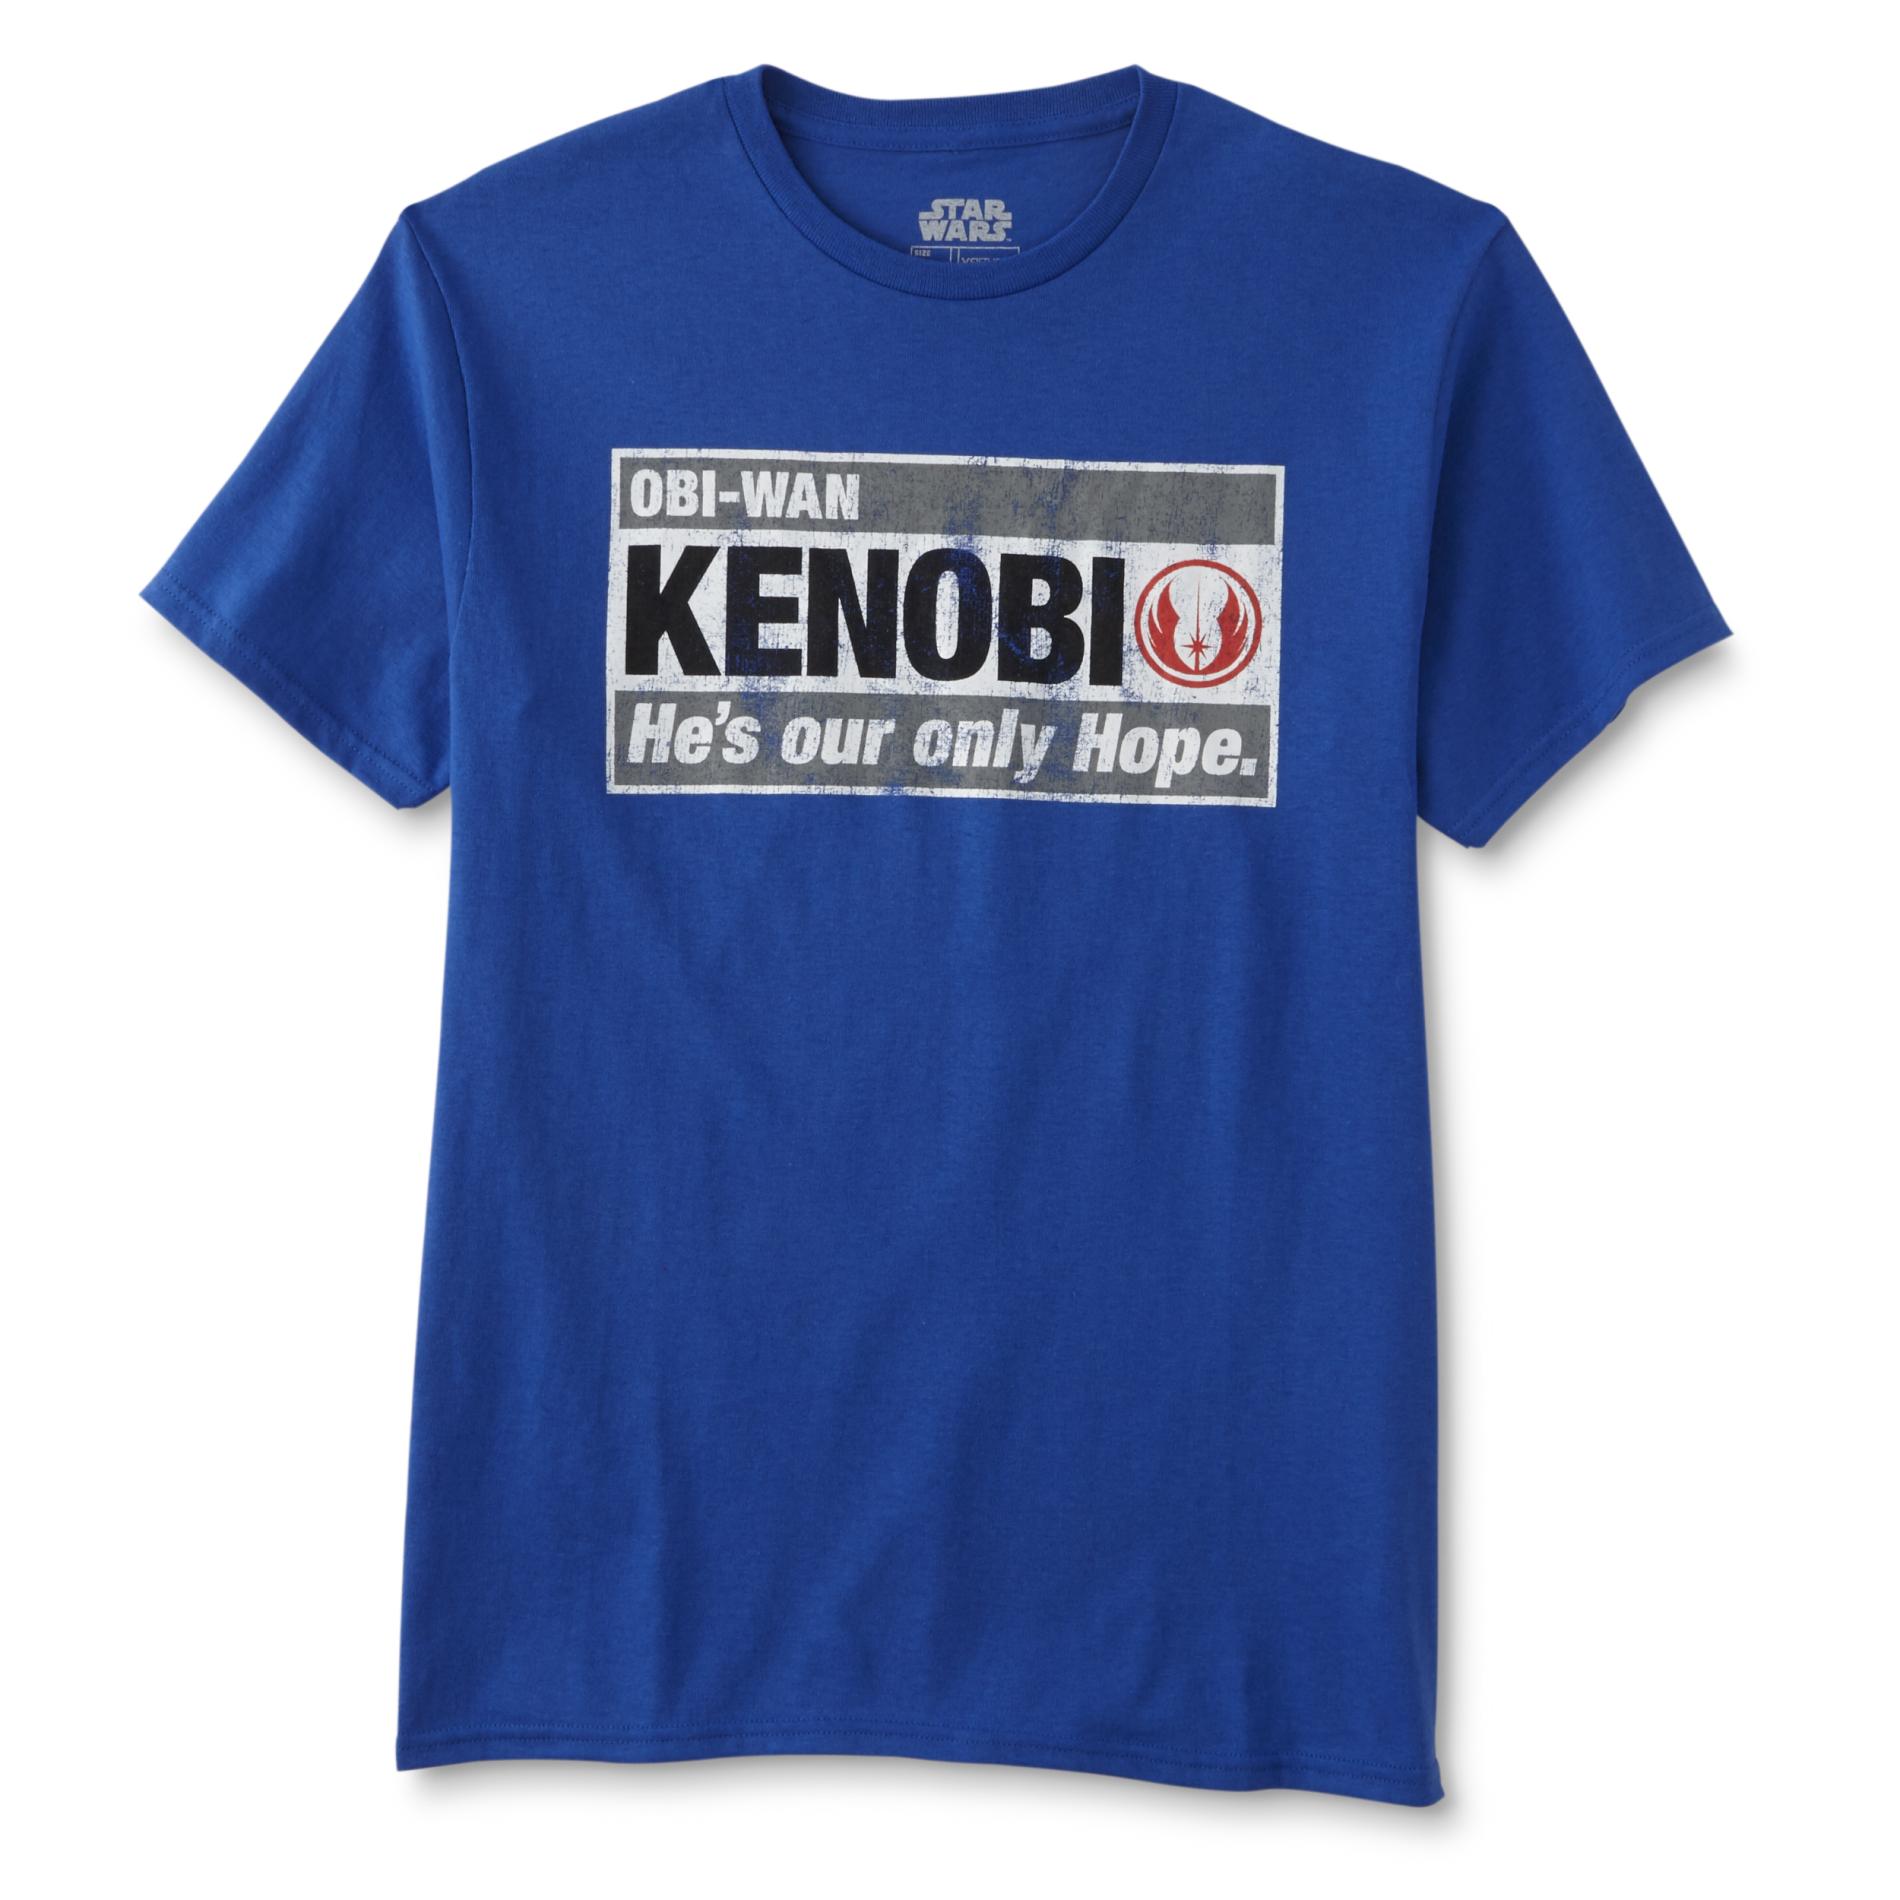 Lucas Films Star Wars Men's Graphic T-Shirt - Obi-Wan Kenobi